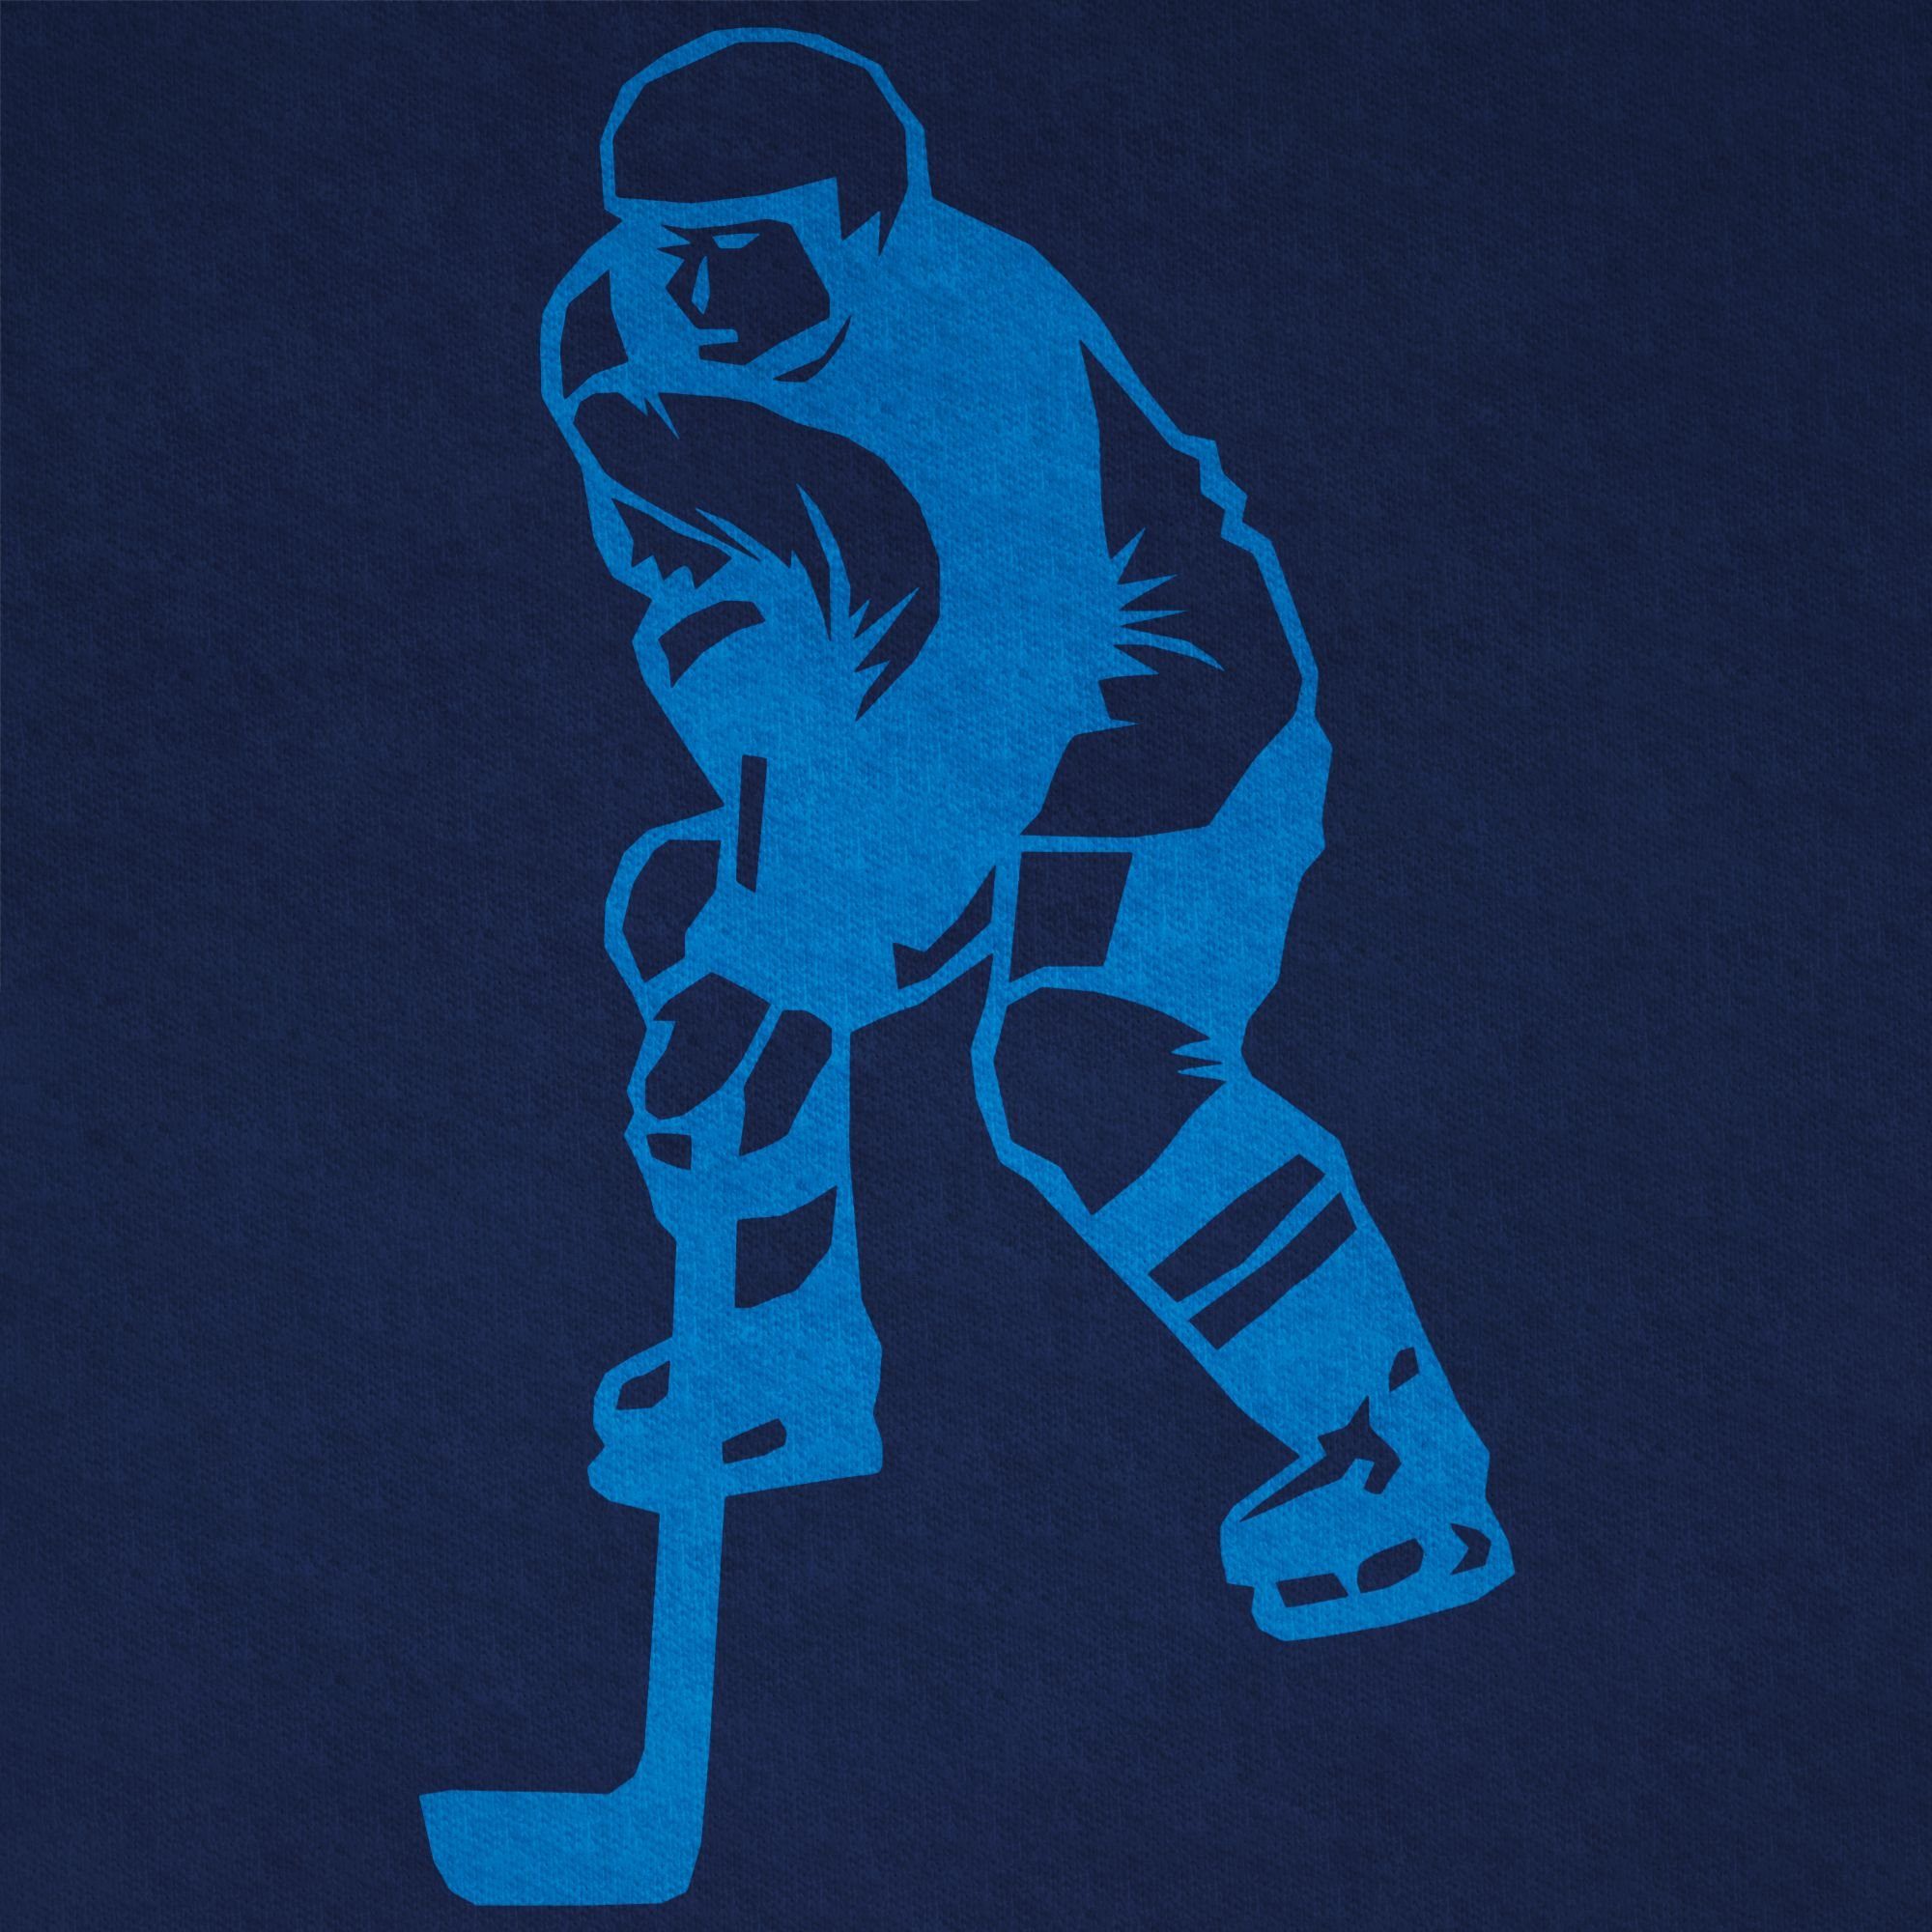 Sport T-Shirt 1 blau Kinder Kleidung Shirtracer Dunkelblau Eishockeyspieler